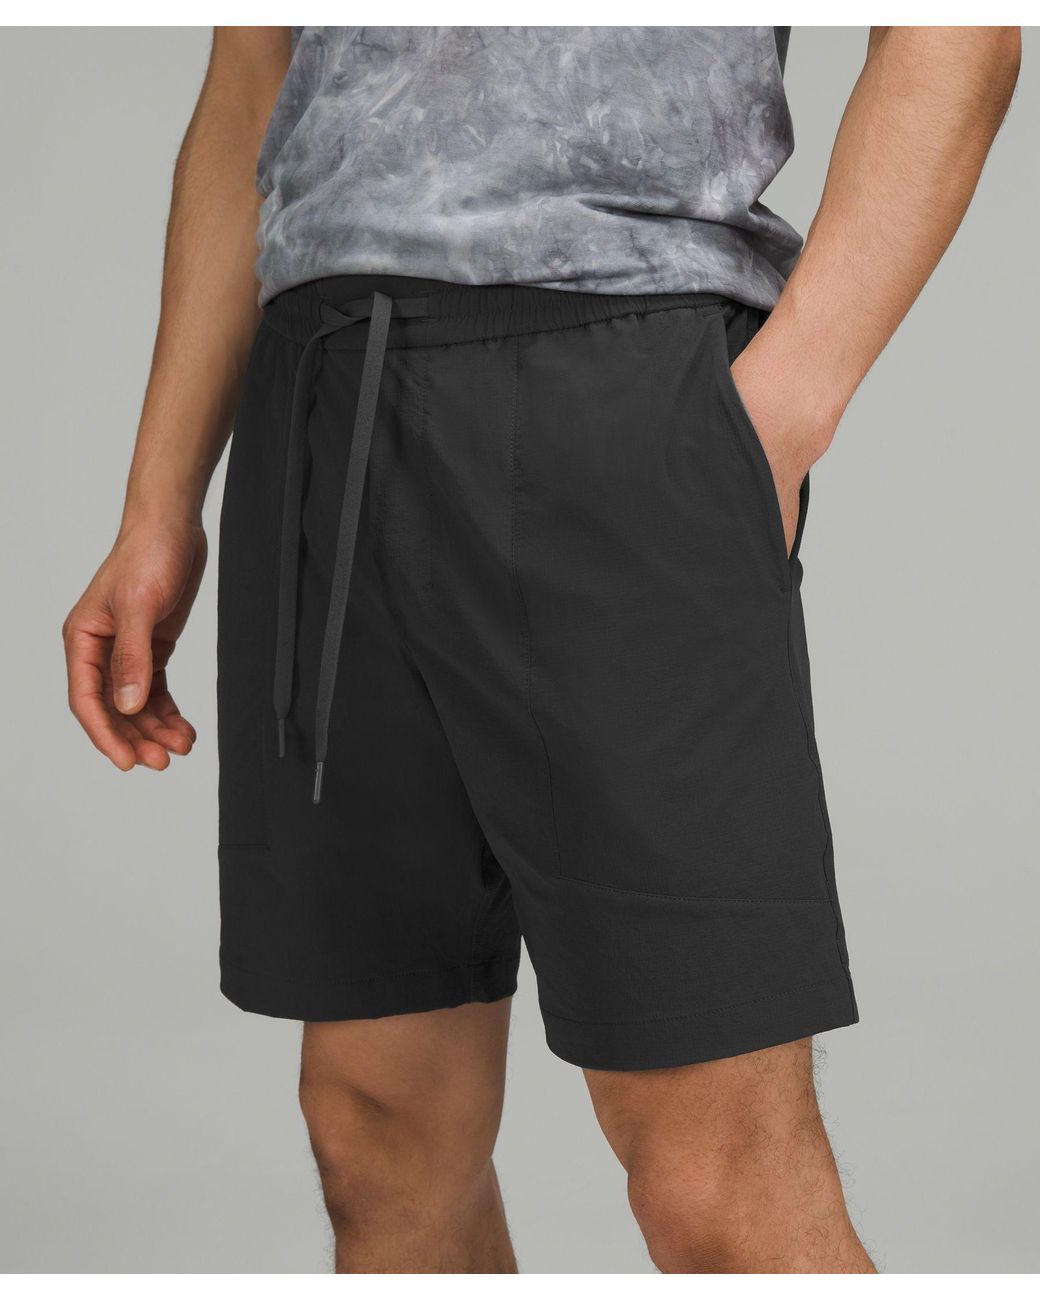 lululemon athletica Bowline Shorts 8 Ripstop in Black for Men